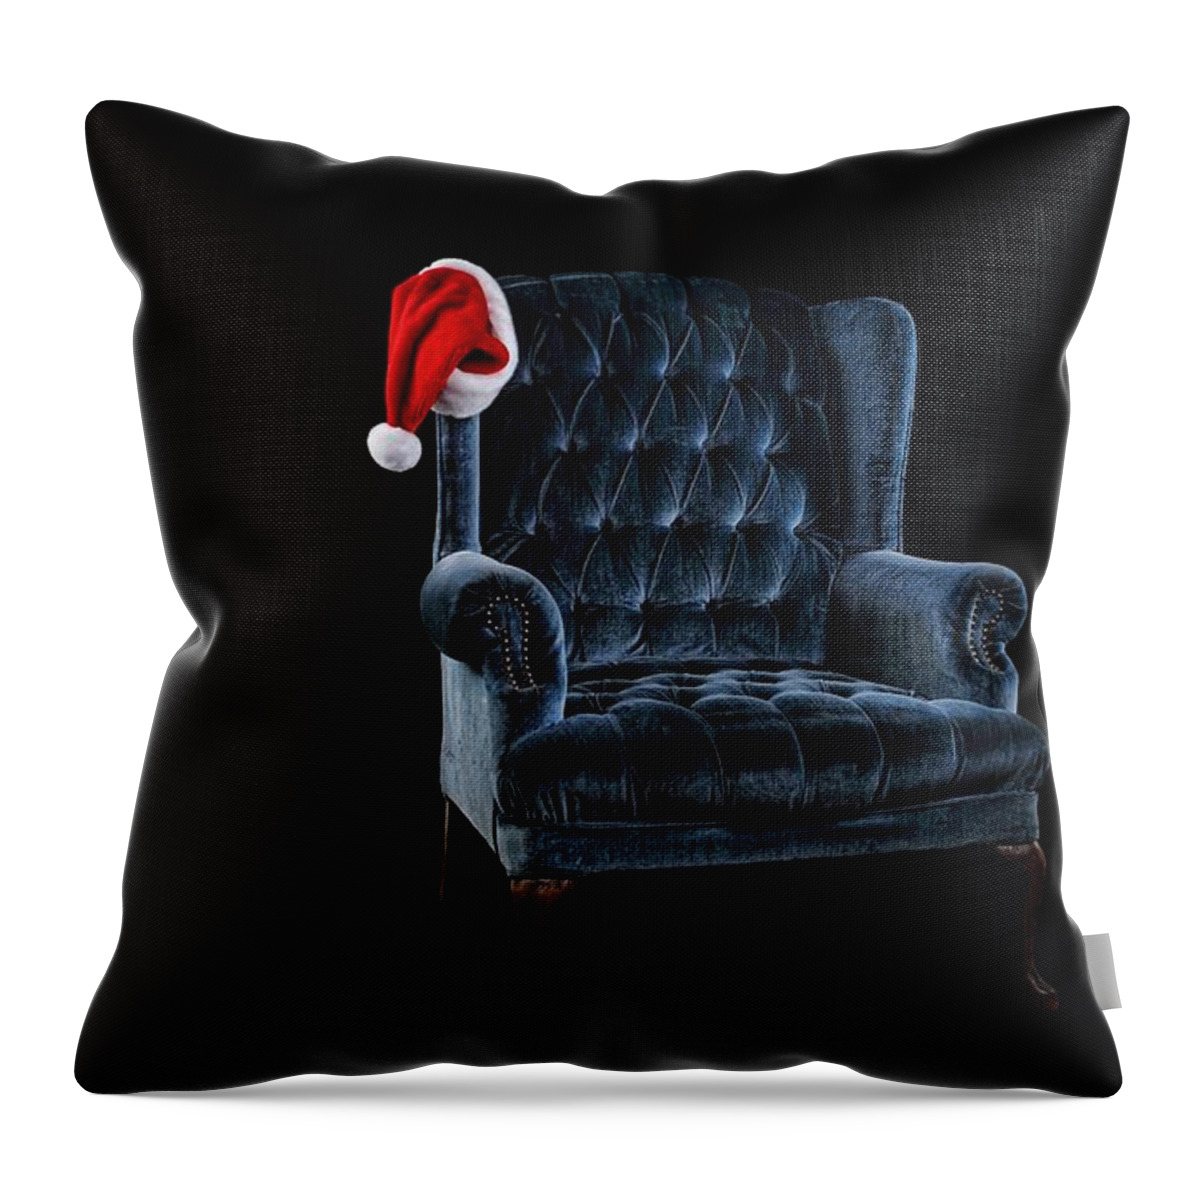 Chair Throw Pillow featuring the digital art Waiting for Santa by Brad Barton